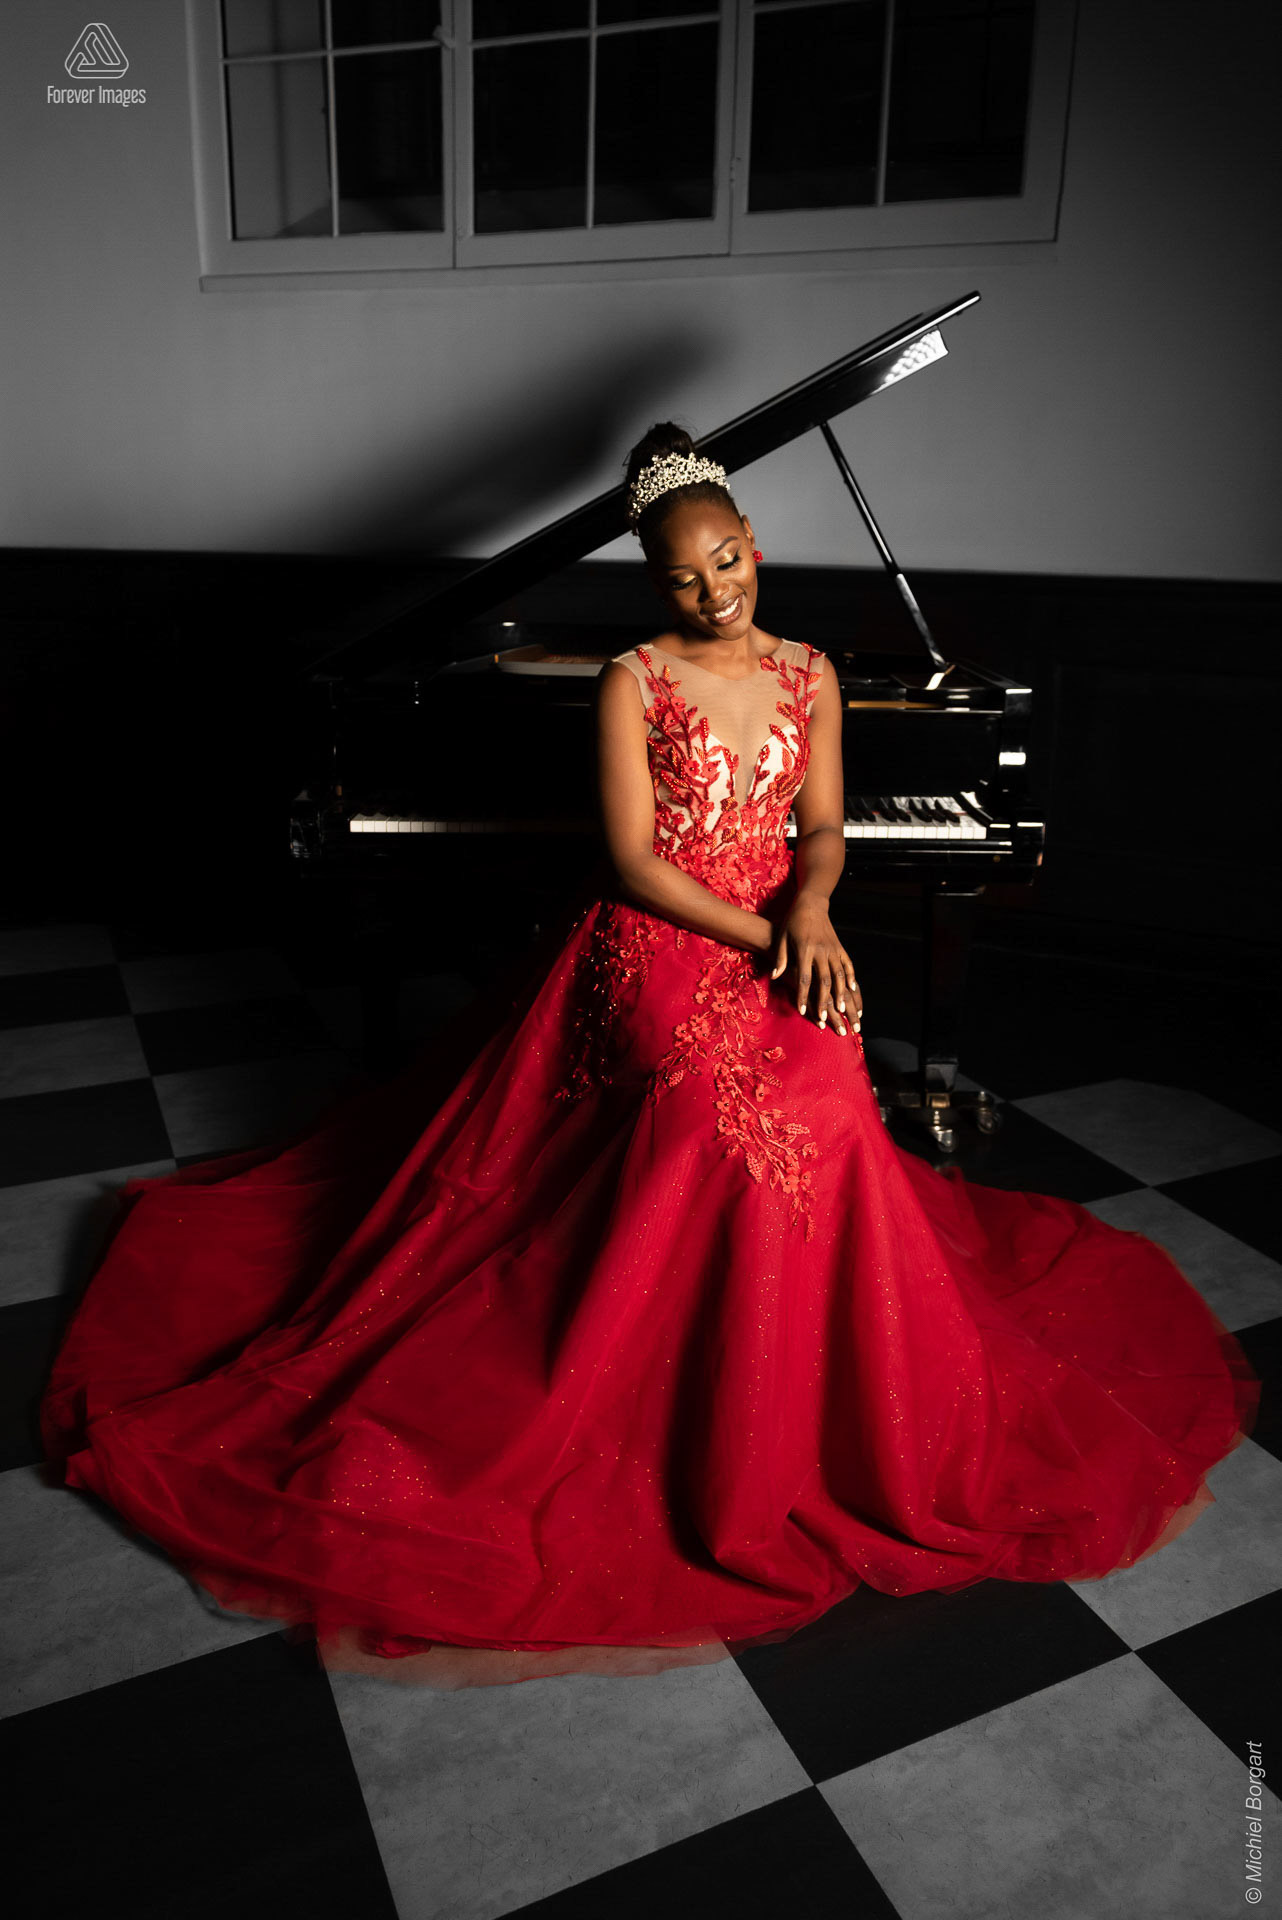 Fashionfoto galajurk rood aan piano lachend | Mariana Pietersz Duc Nguyen Koepelkerk Amsterdam | Fashionfotograaf Michiel Borgart - Forever Images.